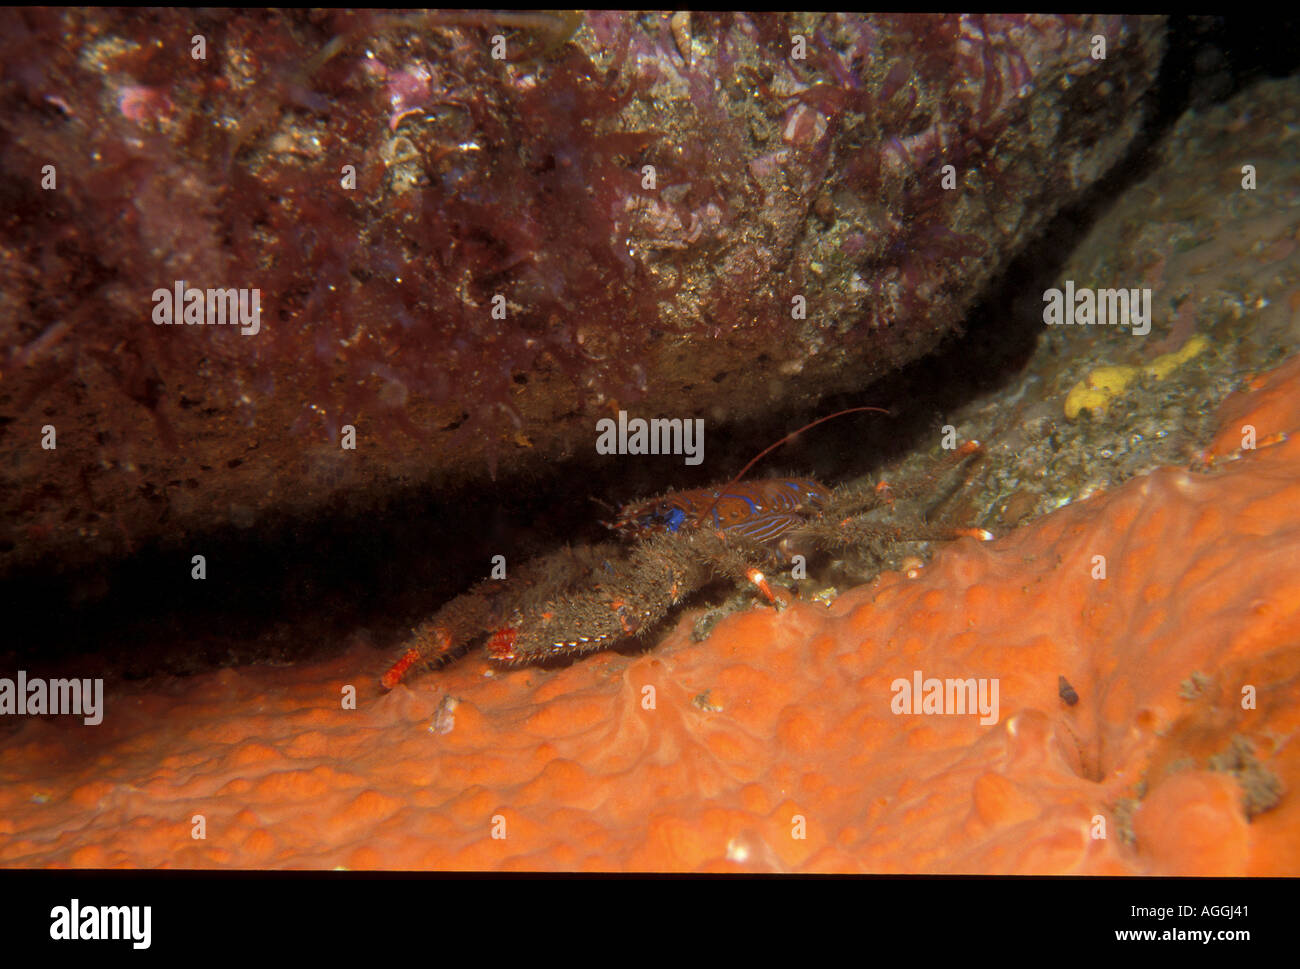 An example of Galathea strigosa in a typical crevice where it lives during the day Guetaria Euzkadi Spain Stock Photo